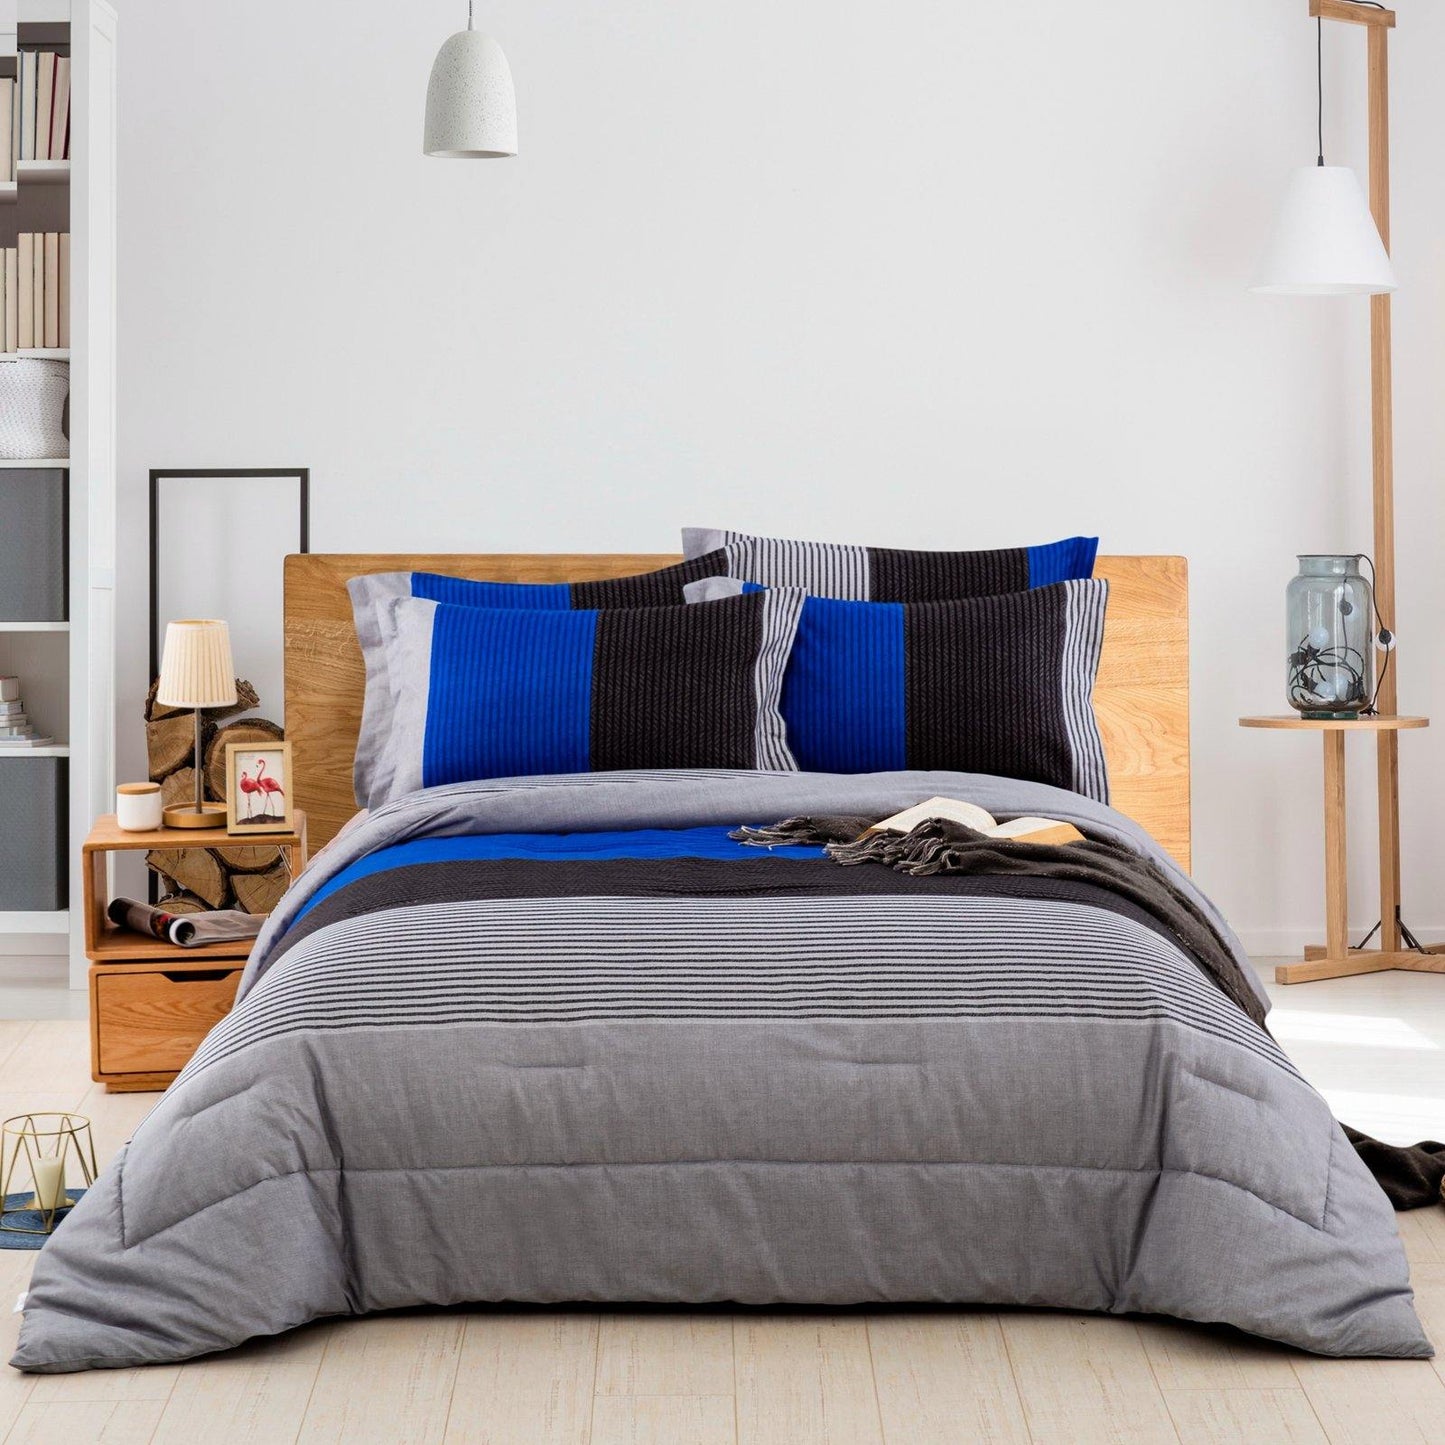 WONGS BEDDING Gray and blue Comforter set 3 Pieces Bedding Comforter with 2 Pillow Cases - Wongs bedding